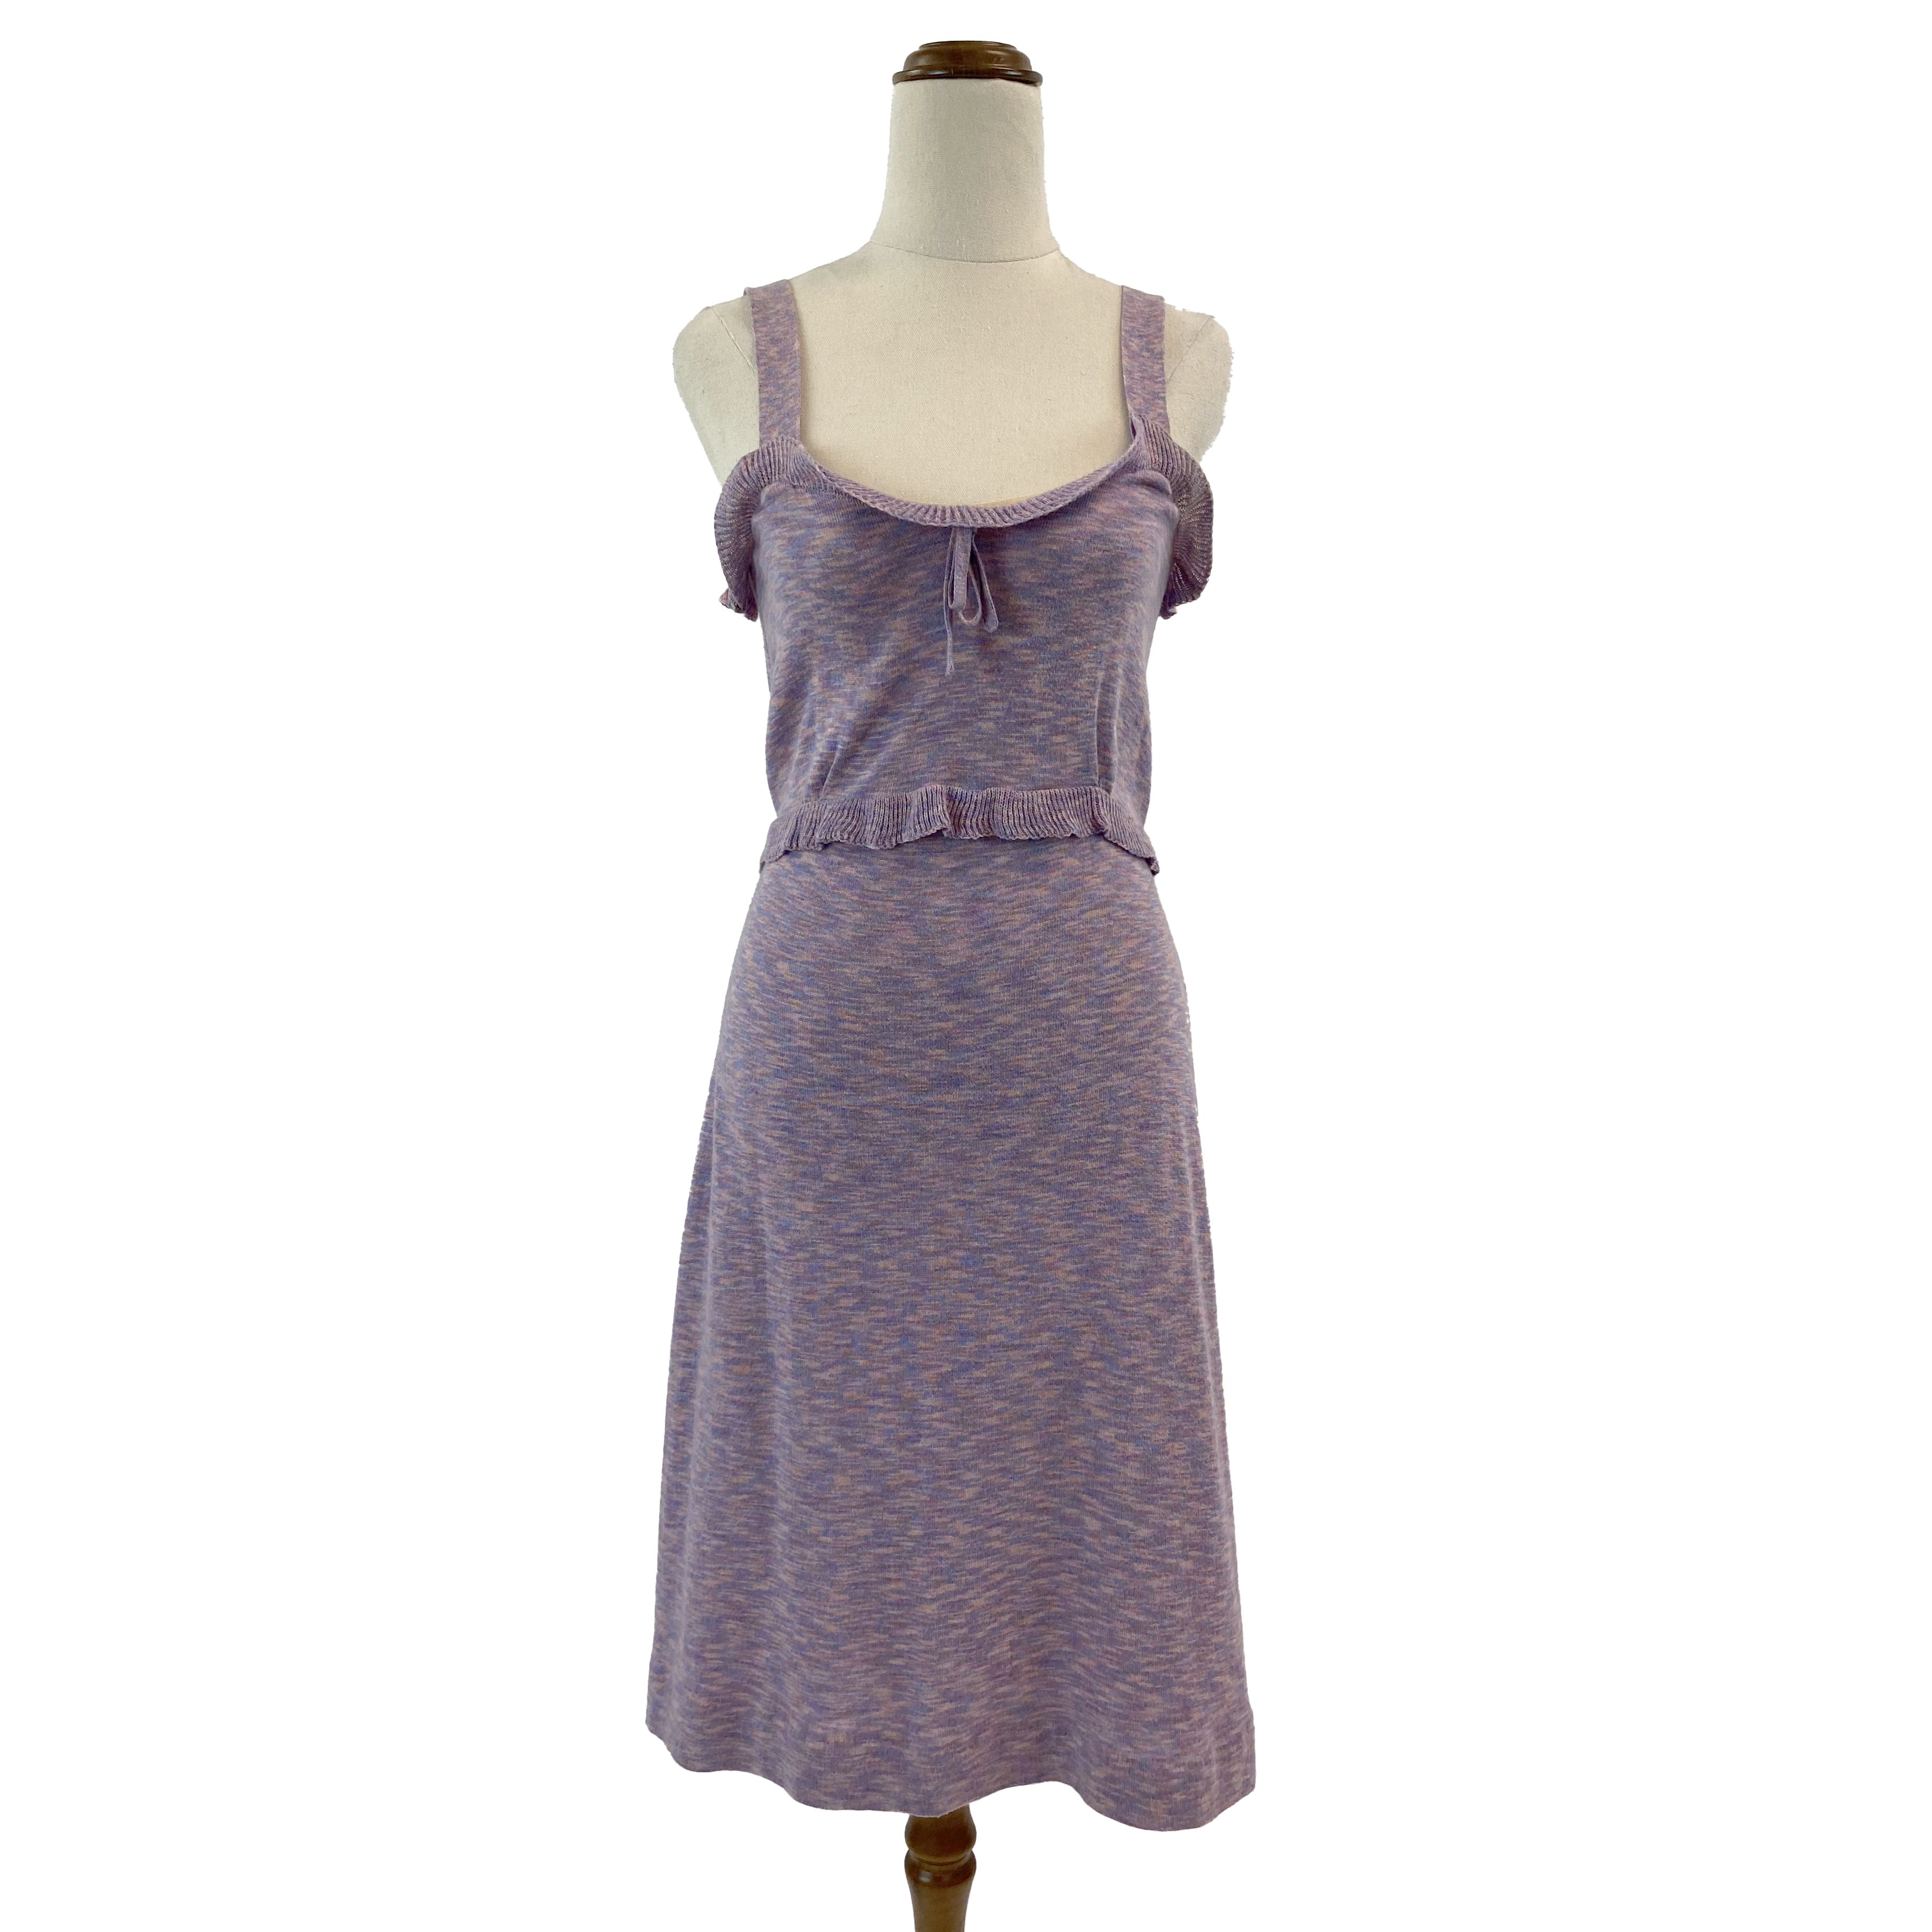 Scanlan & Theodore Pink/Purple Light Knit Dress